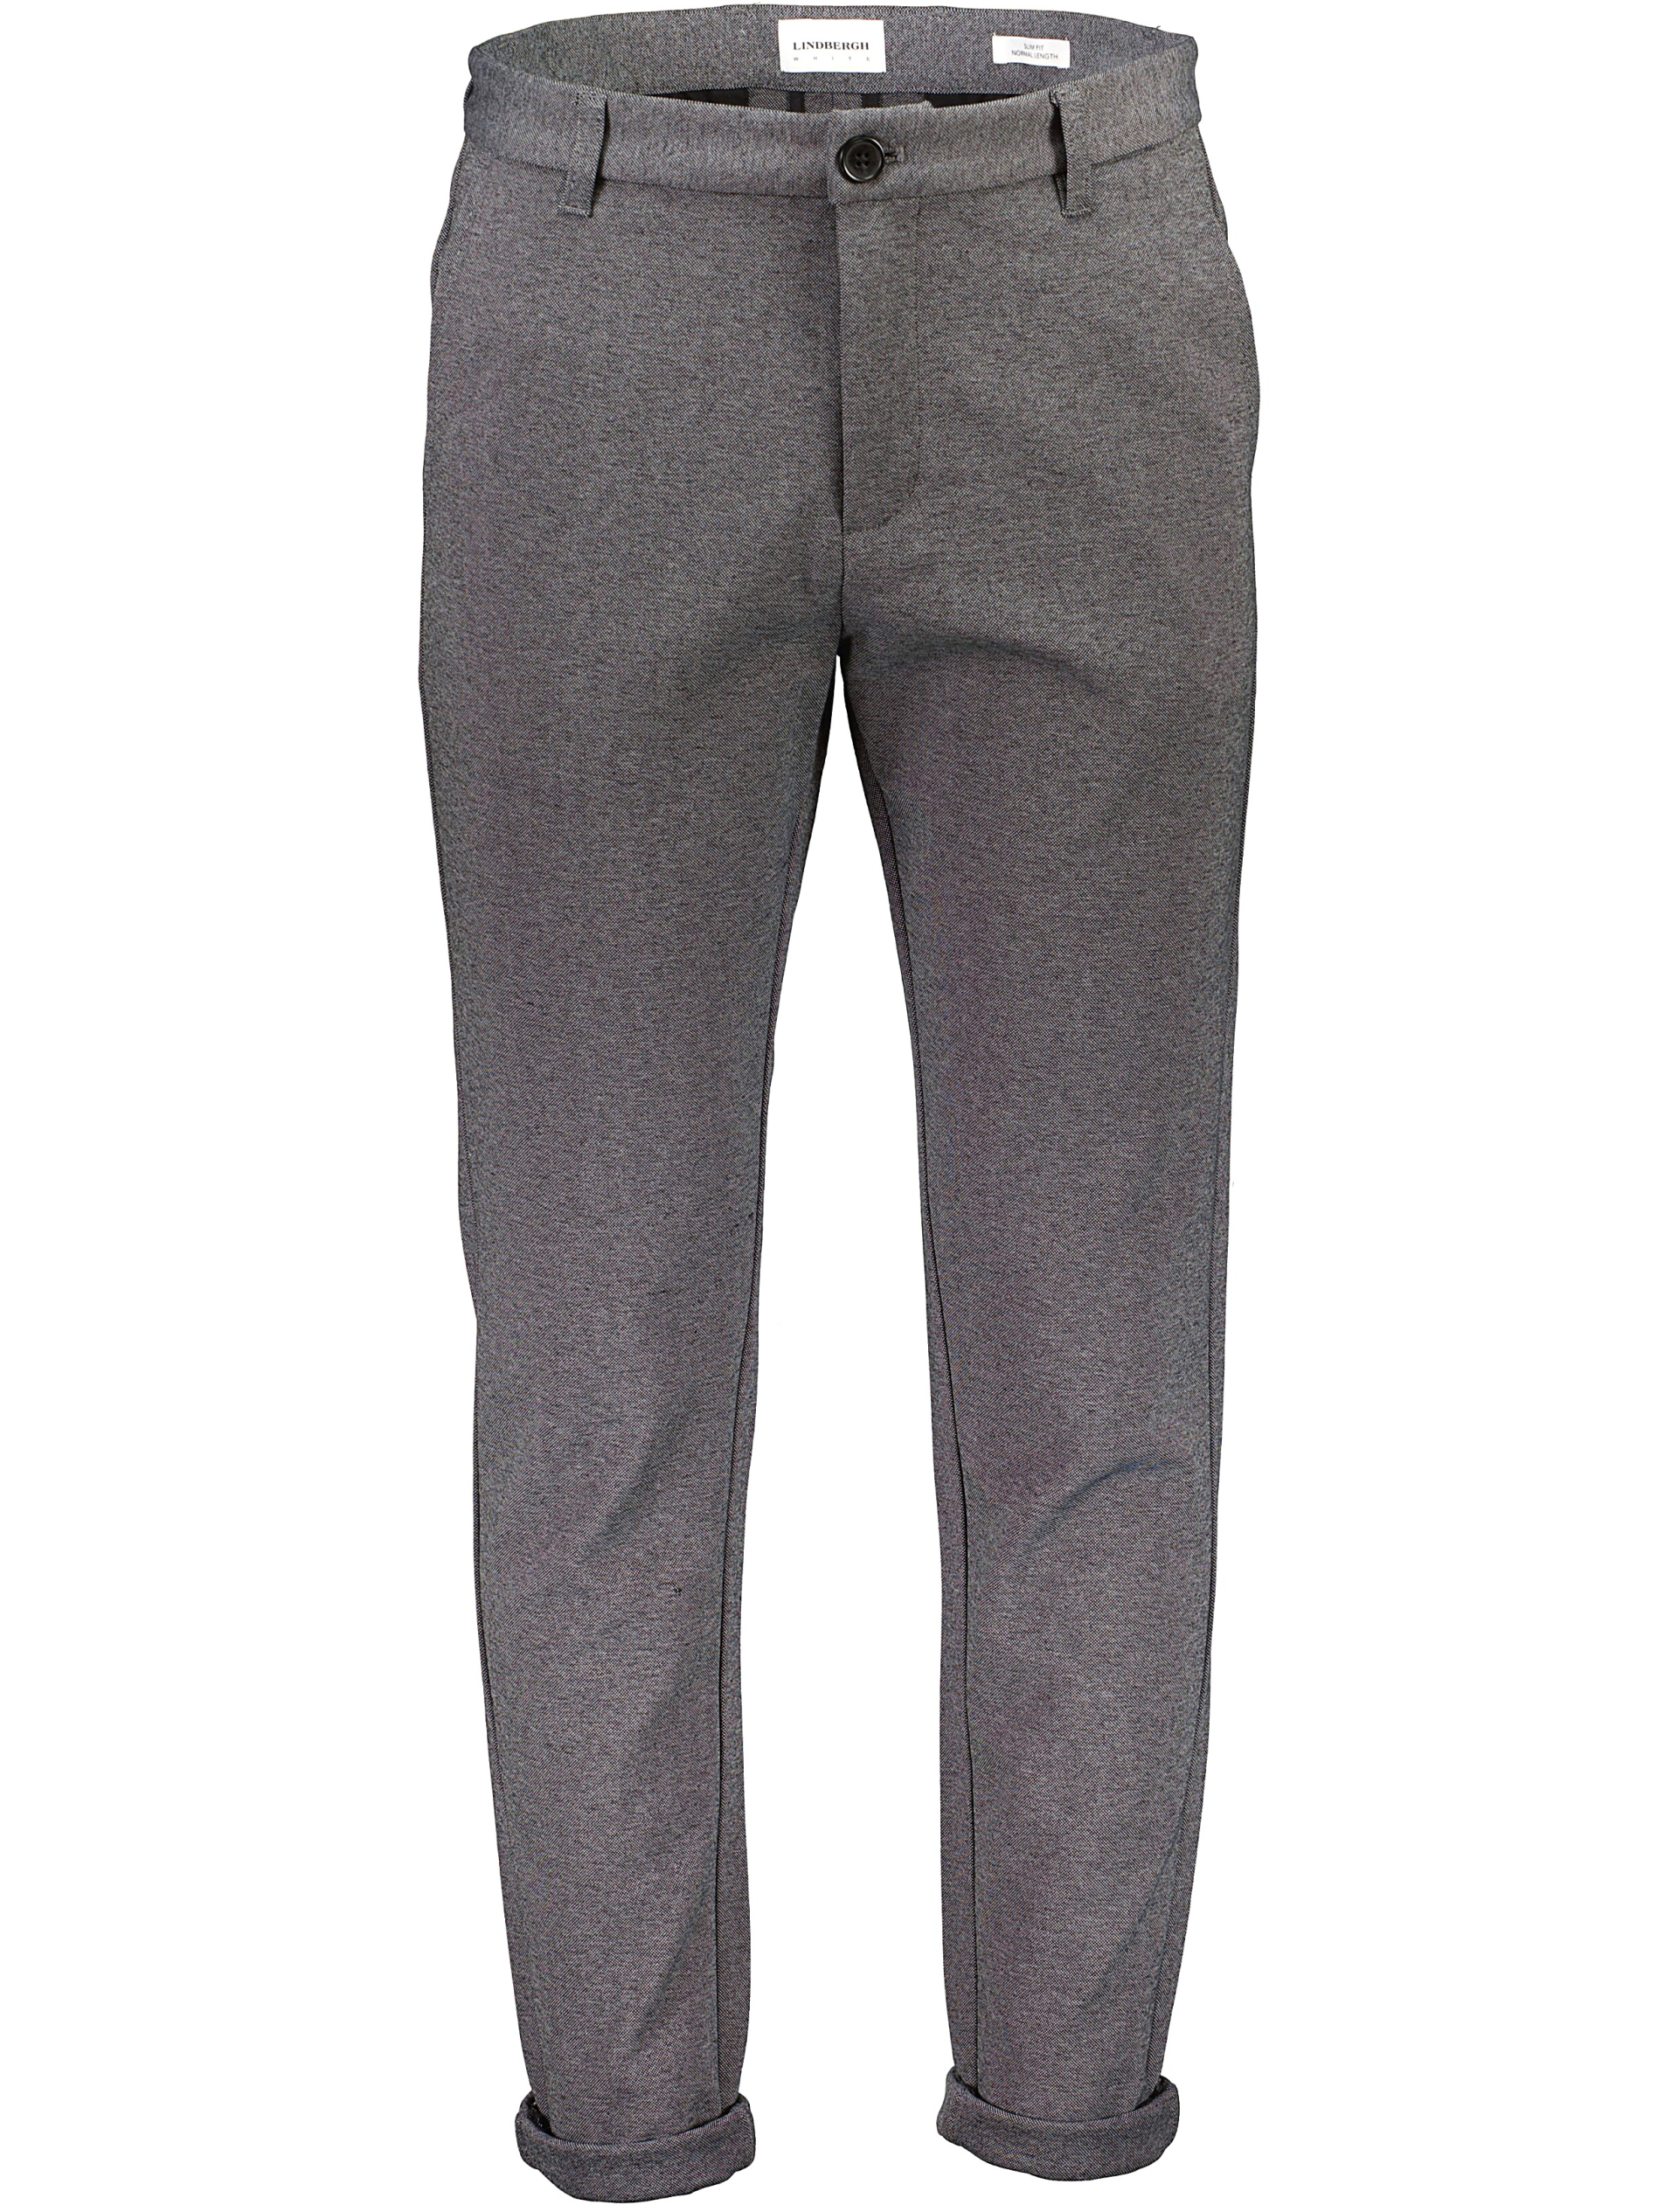 Lindbergh Performance pants grey / grey mix